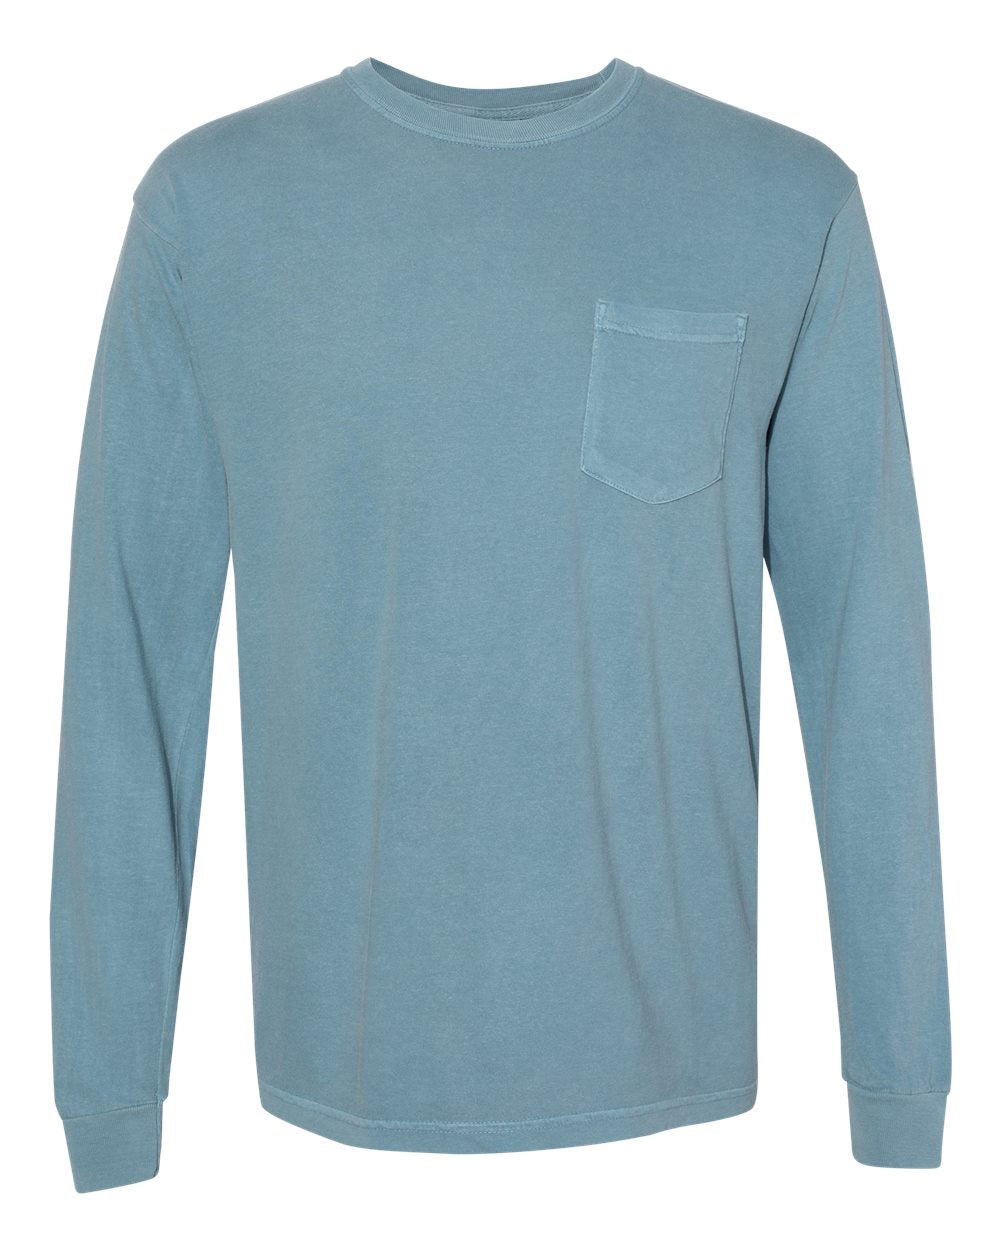 Comfort Colors - Garment-Dyed Heavyweight Long Sleeve Pocket T-Shirt - 4410. S-3XL